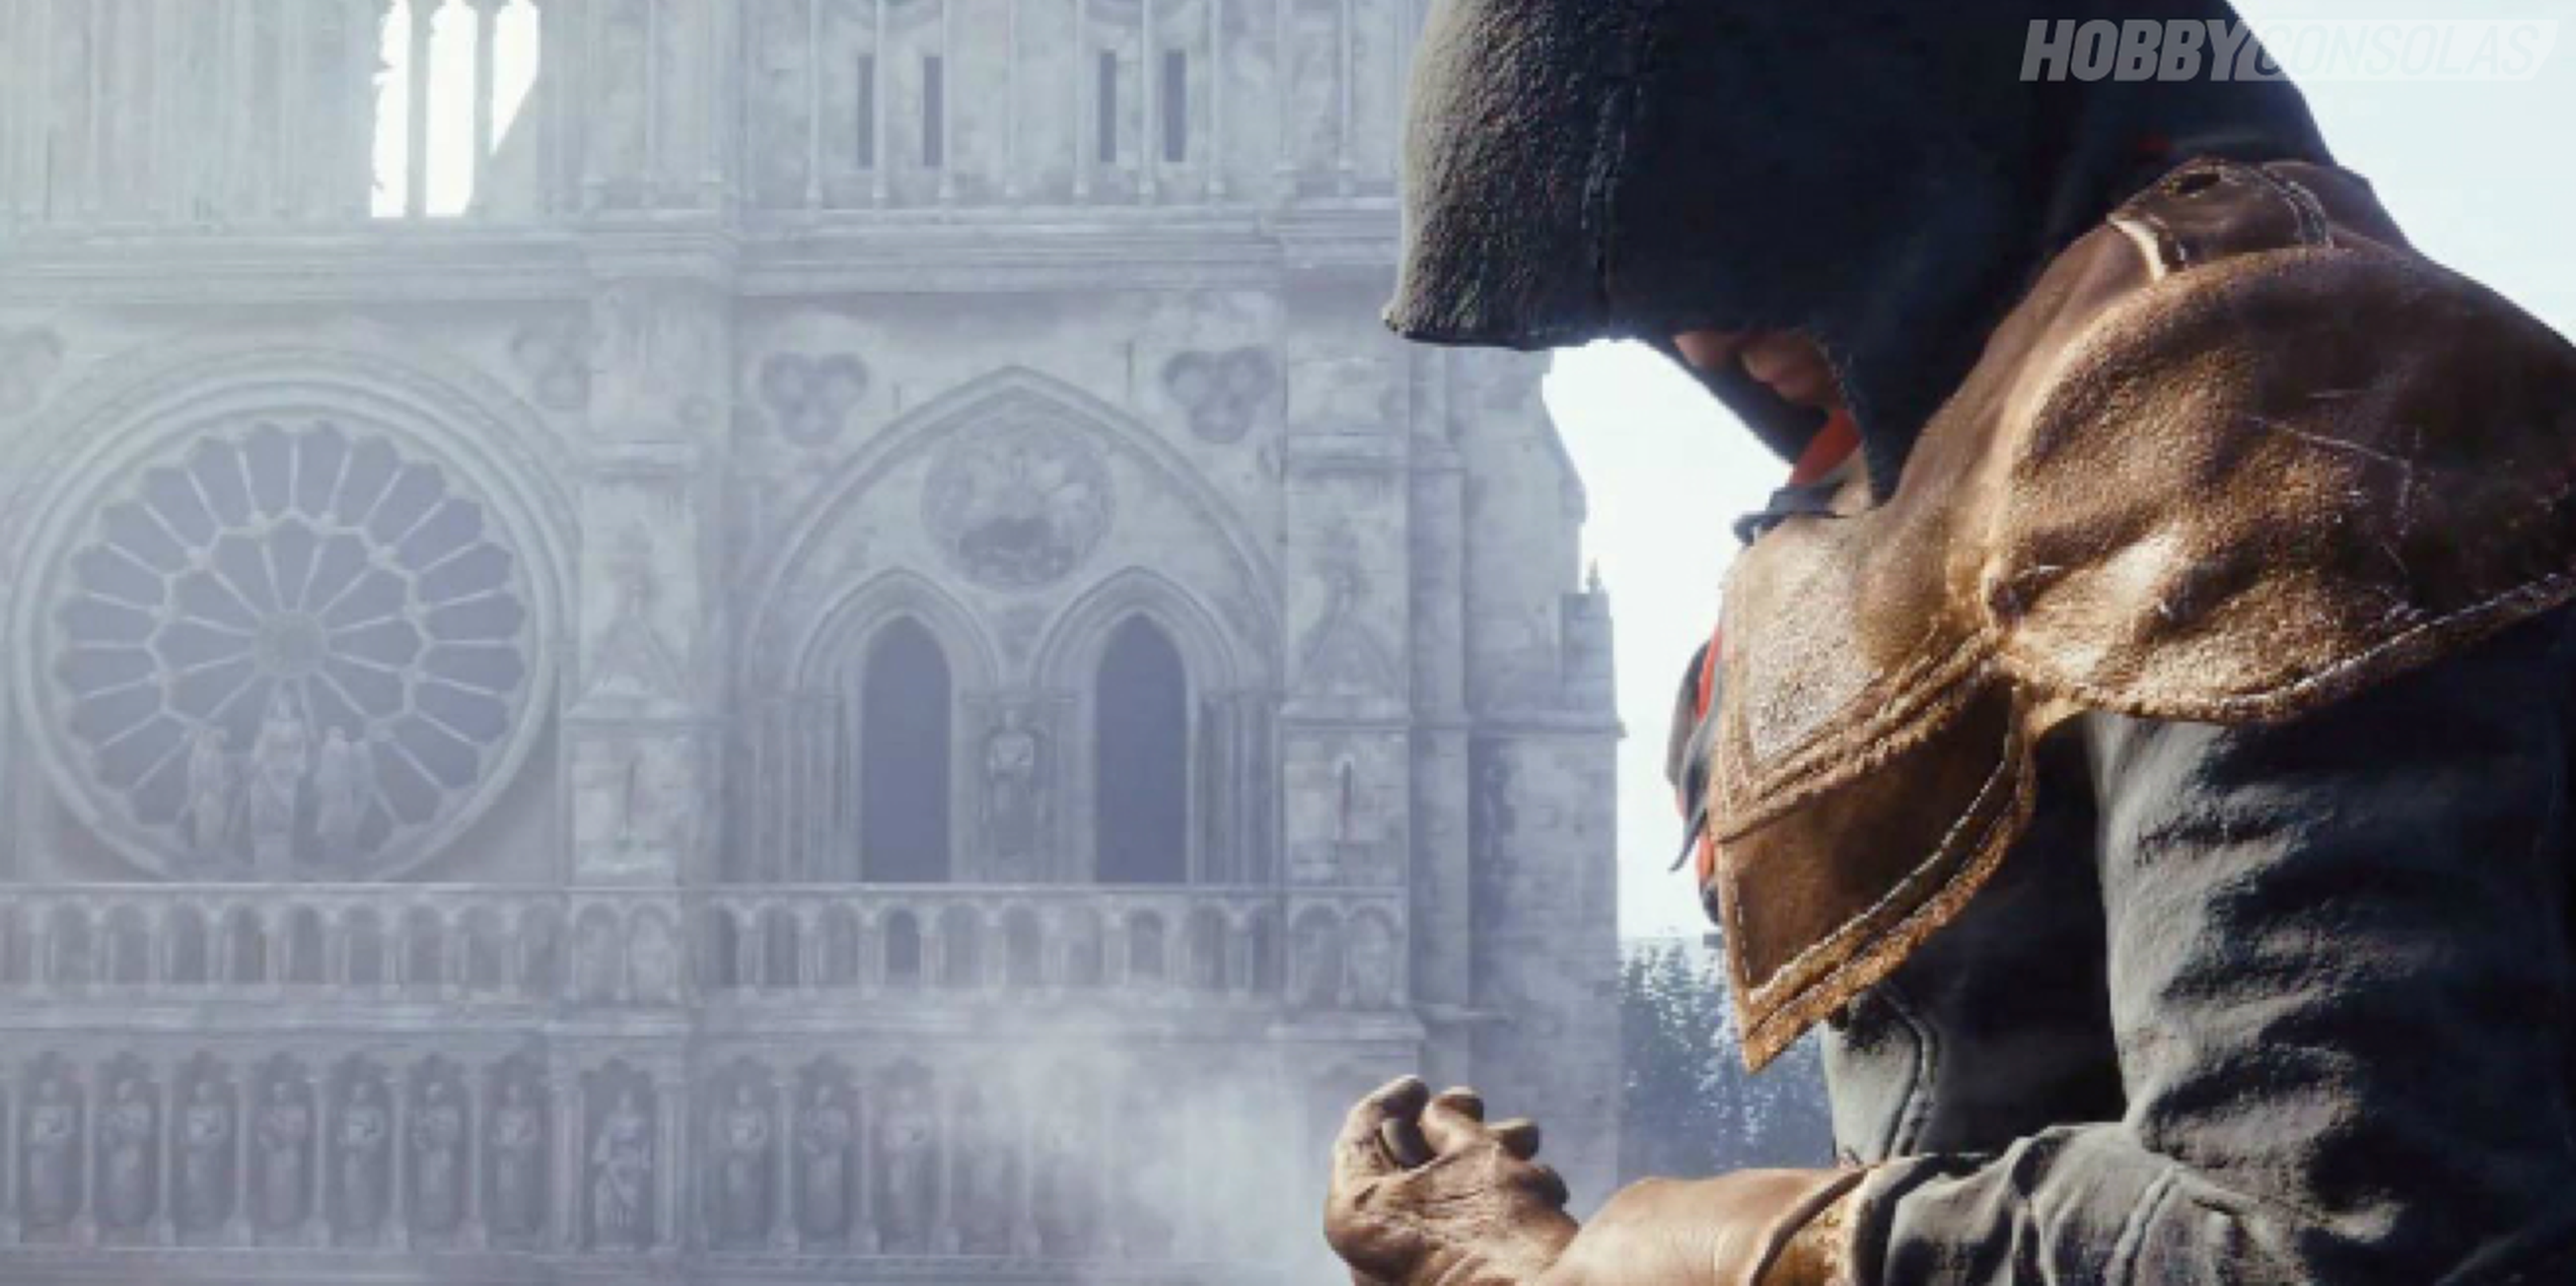 10 estudios trabajan en Assassin's Creed Unity